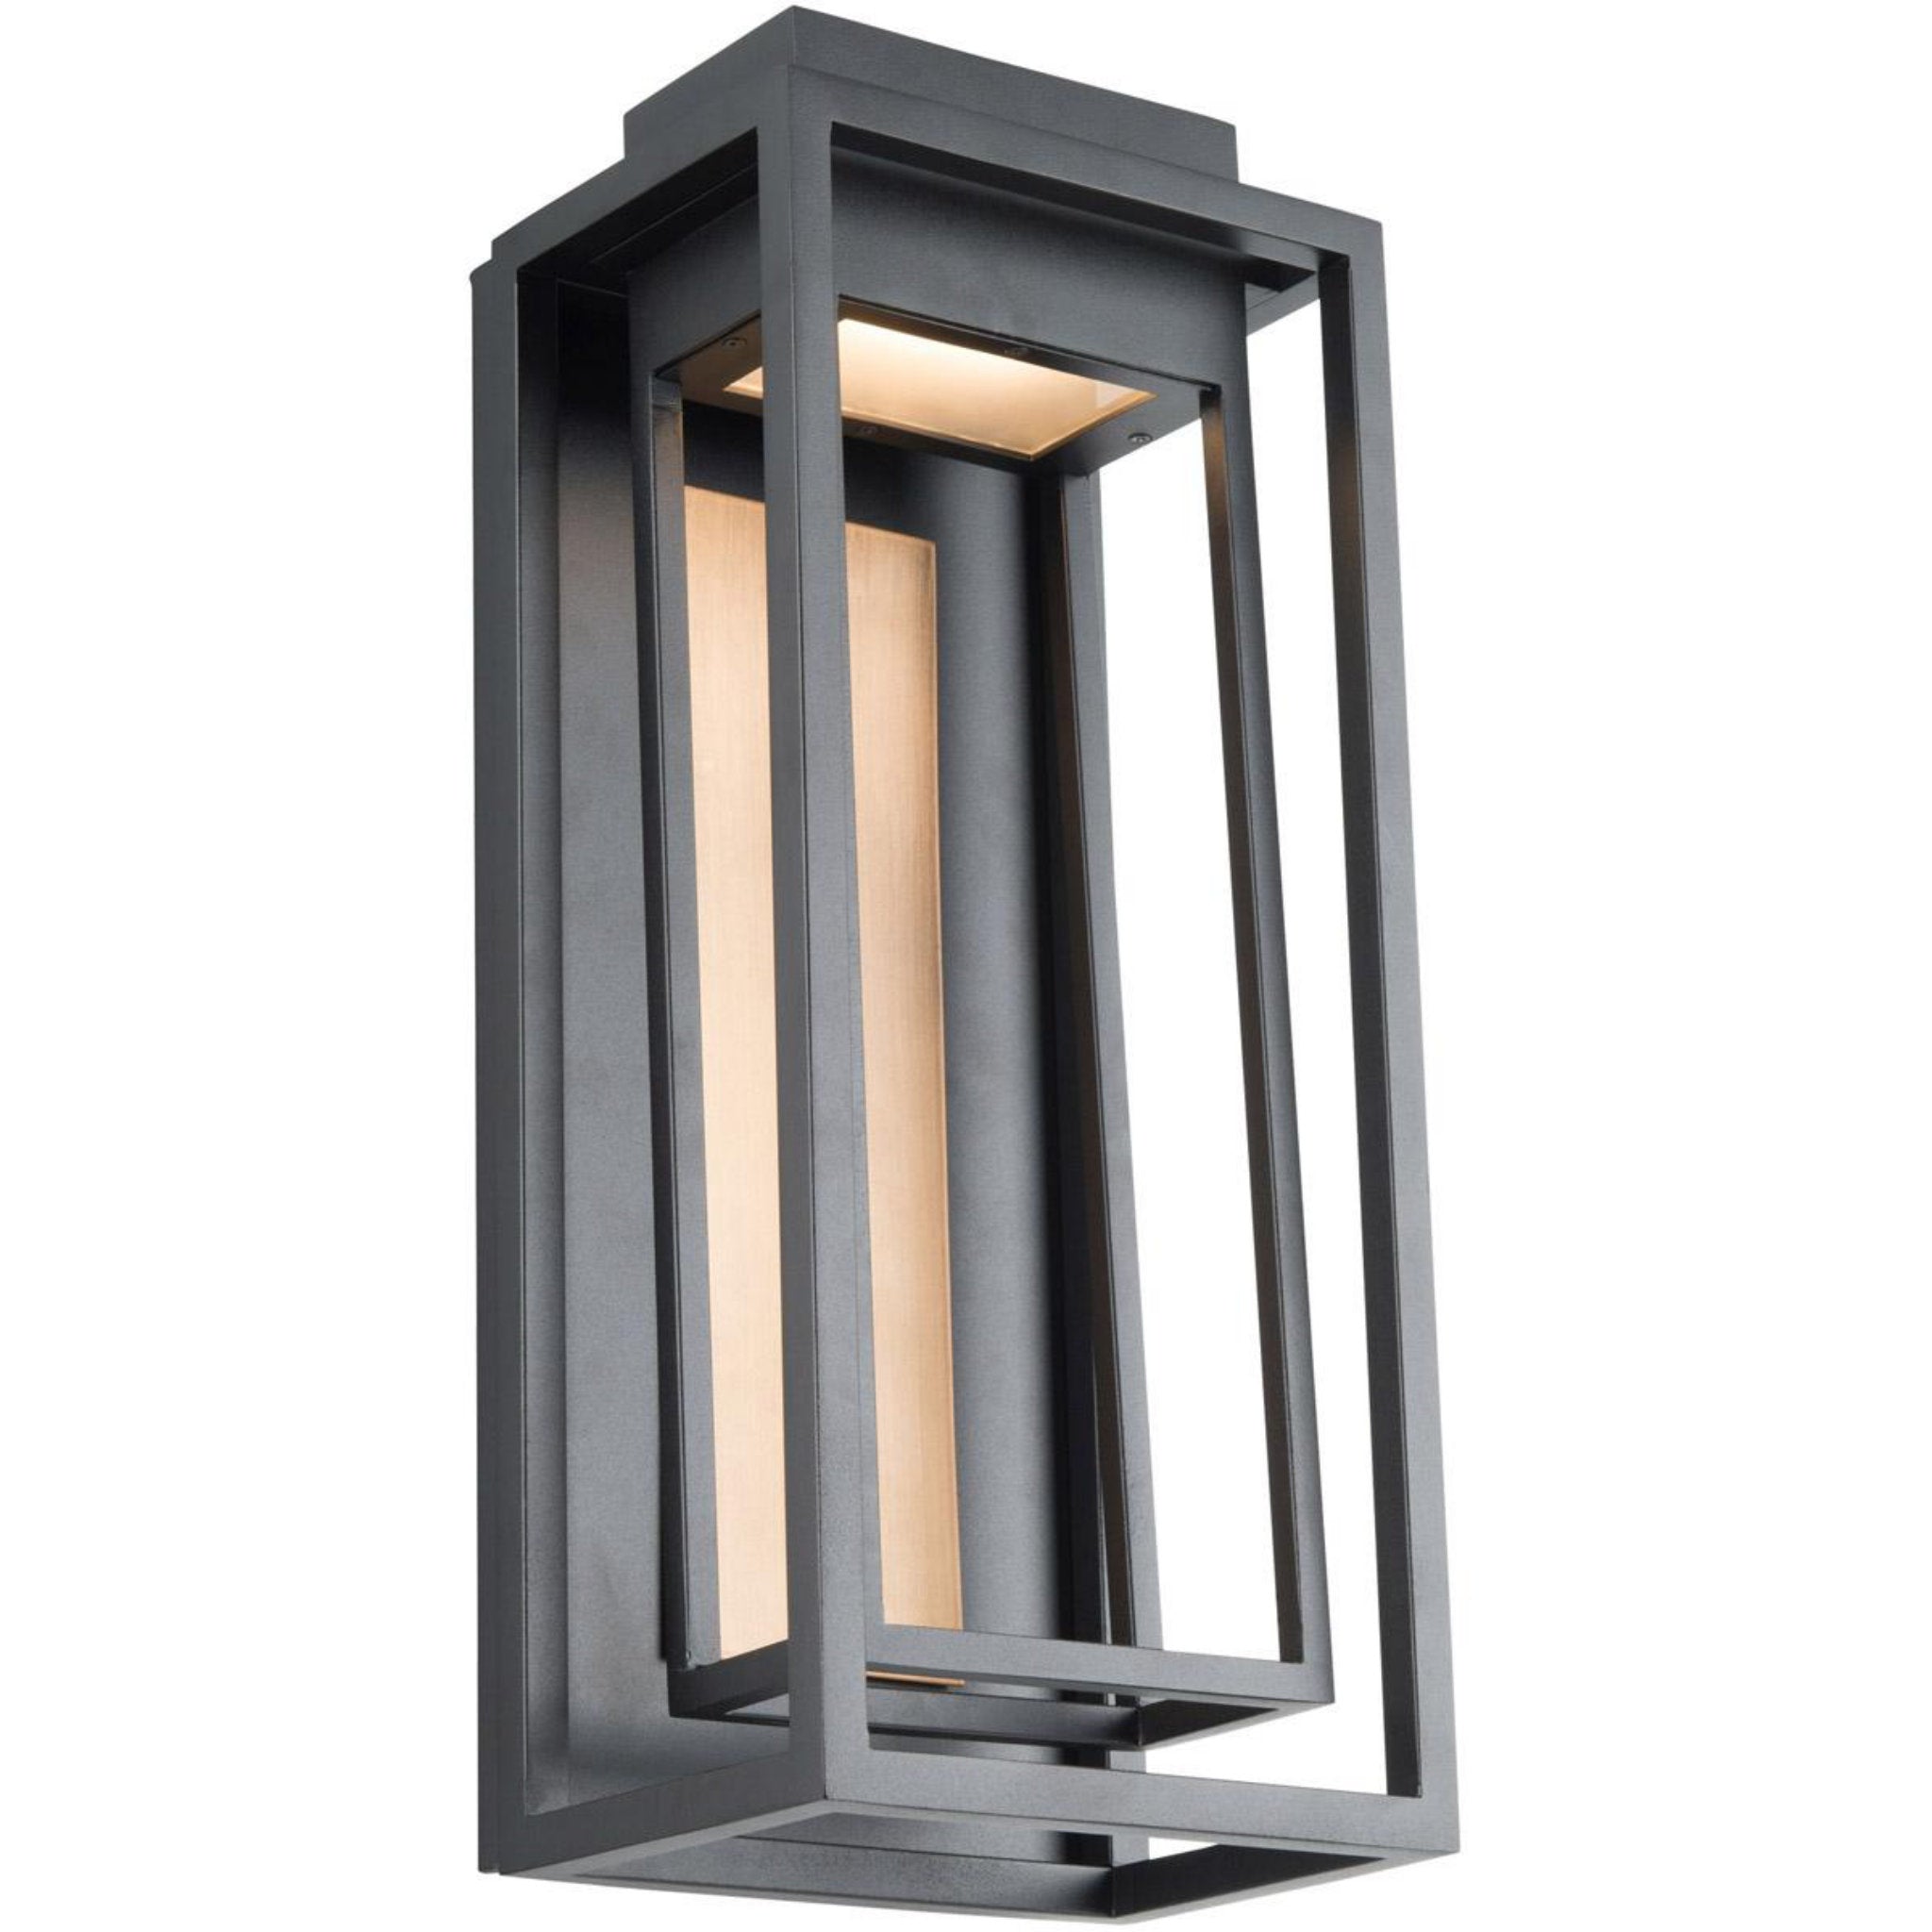 Modern Forms WS-W57018-BK/AB 3000K 8 Watt Dorne LED Outdoor Wall Light in Black & Aged Brass